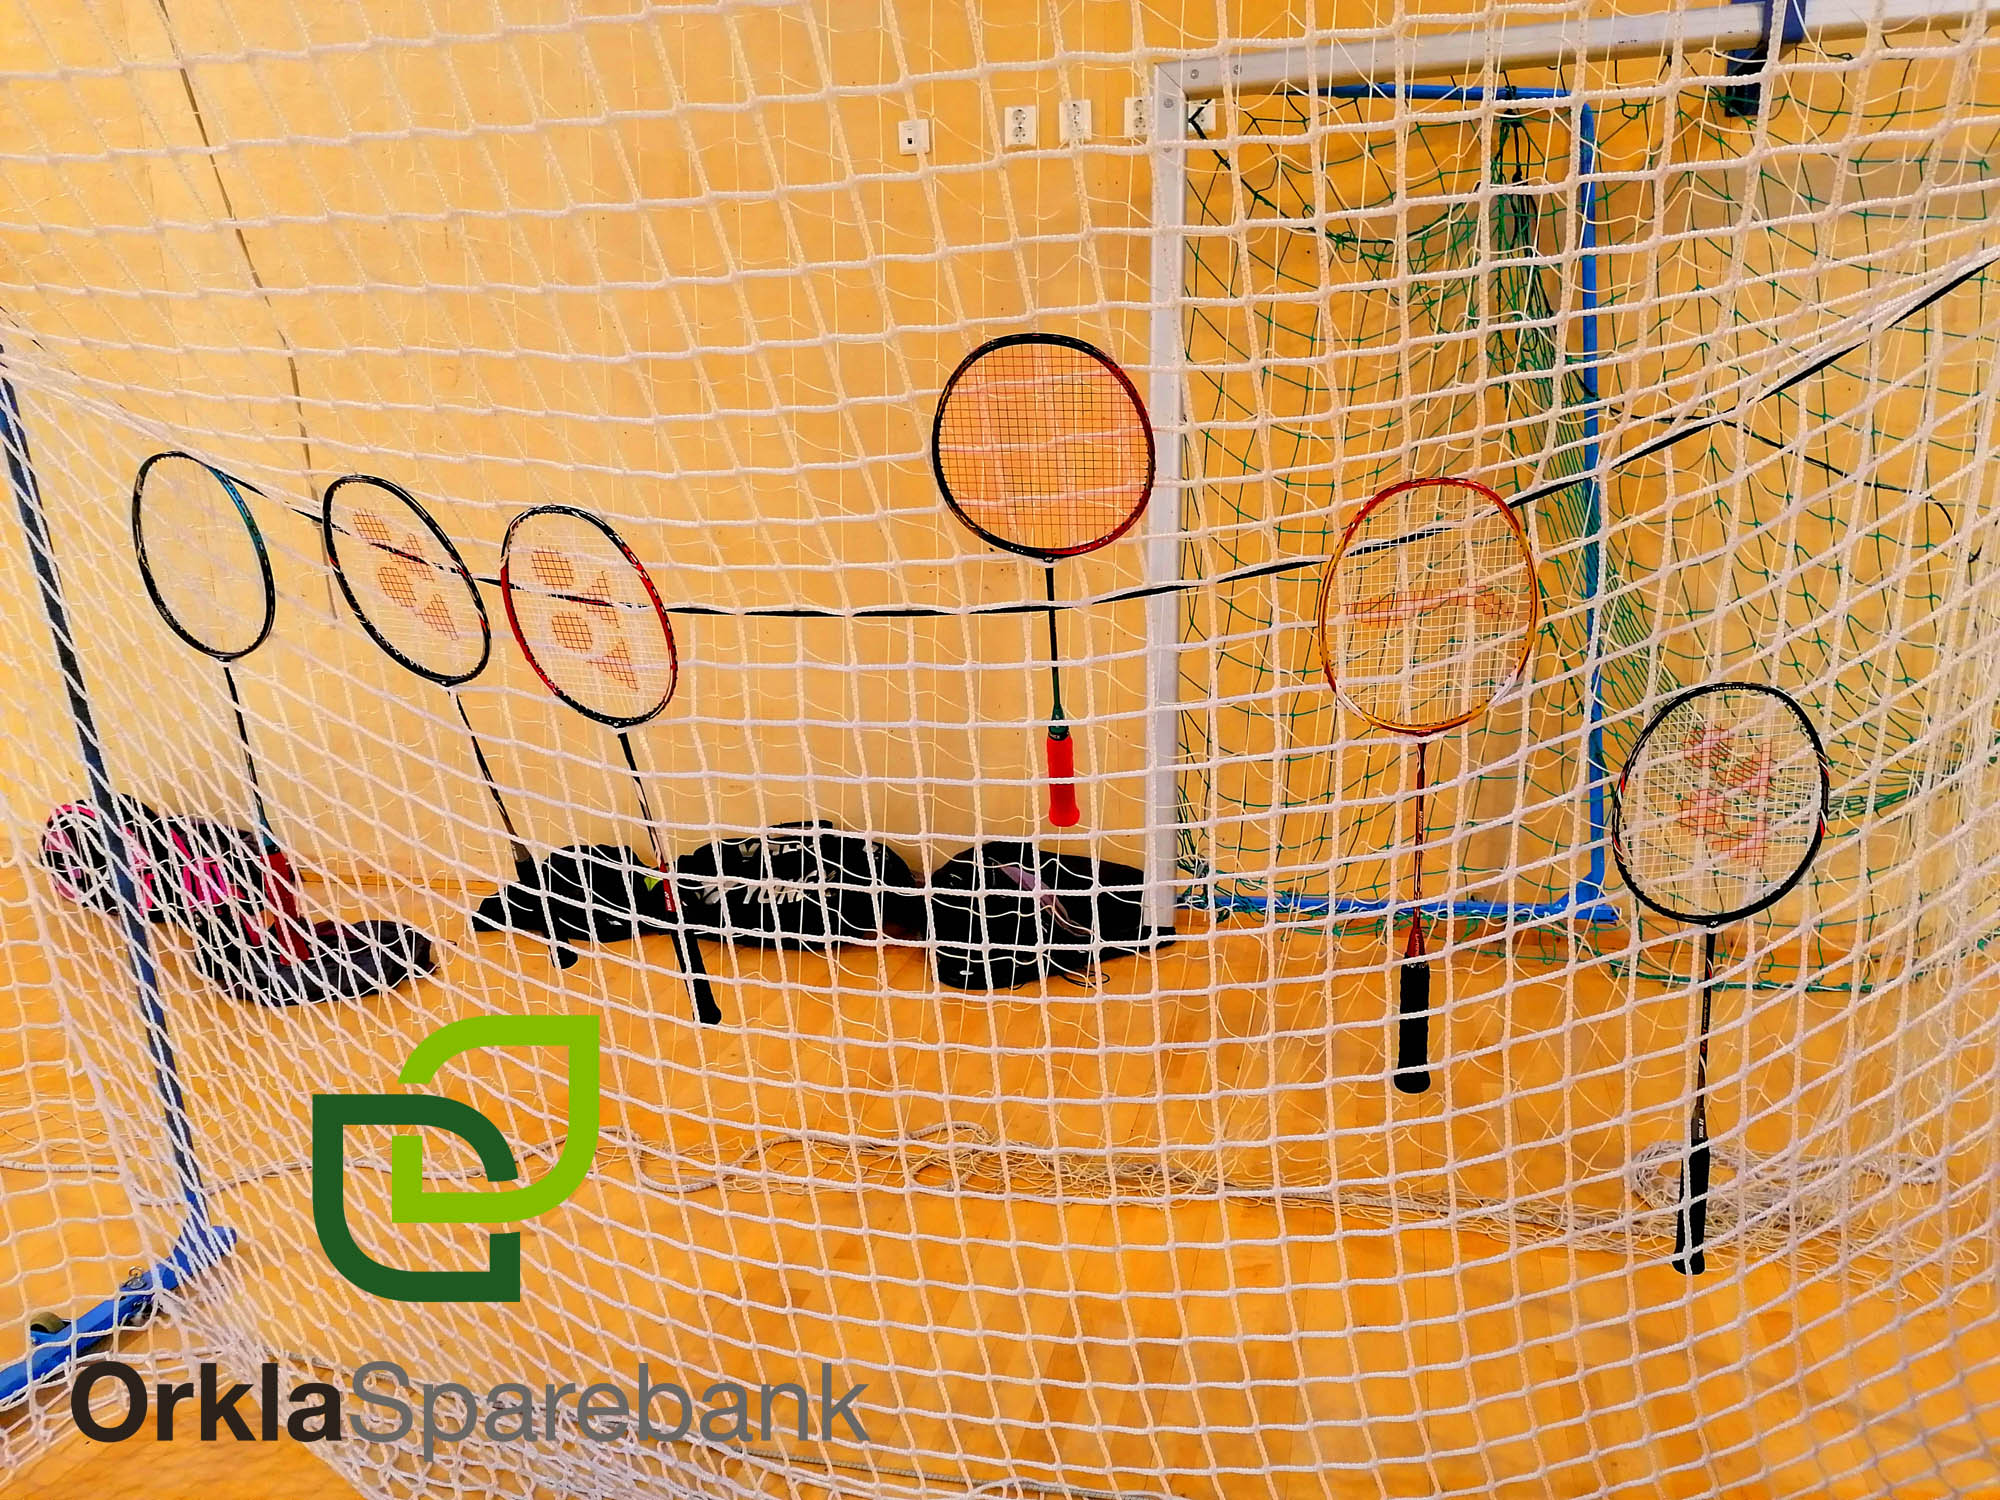 Orkla Sparebank + Orkanger Badmintonklubb = Badmintonglede!